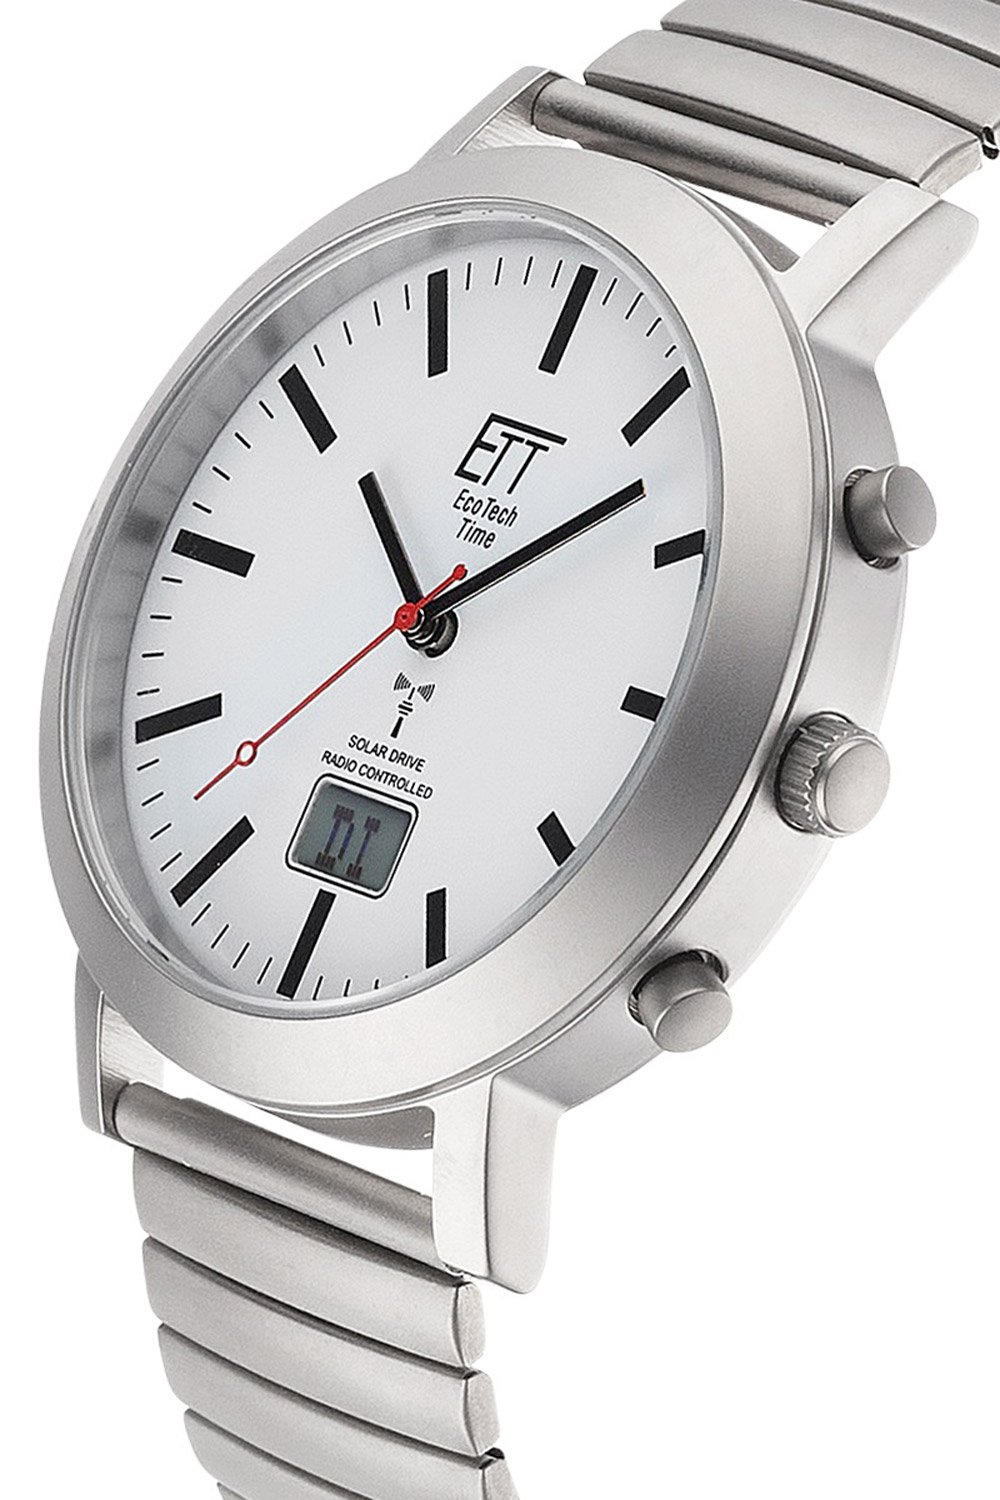 ETT Eco Tech Time Station • EGS Zugband Watch -11580-11M uhrcenter Funk-Solar mit Herren-Armbanduhr